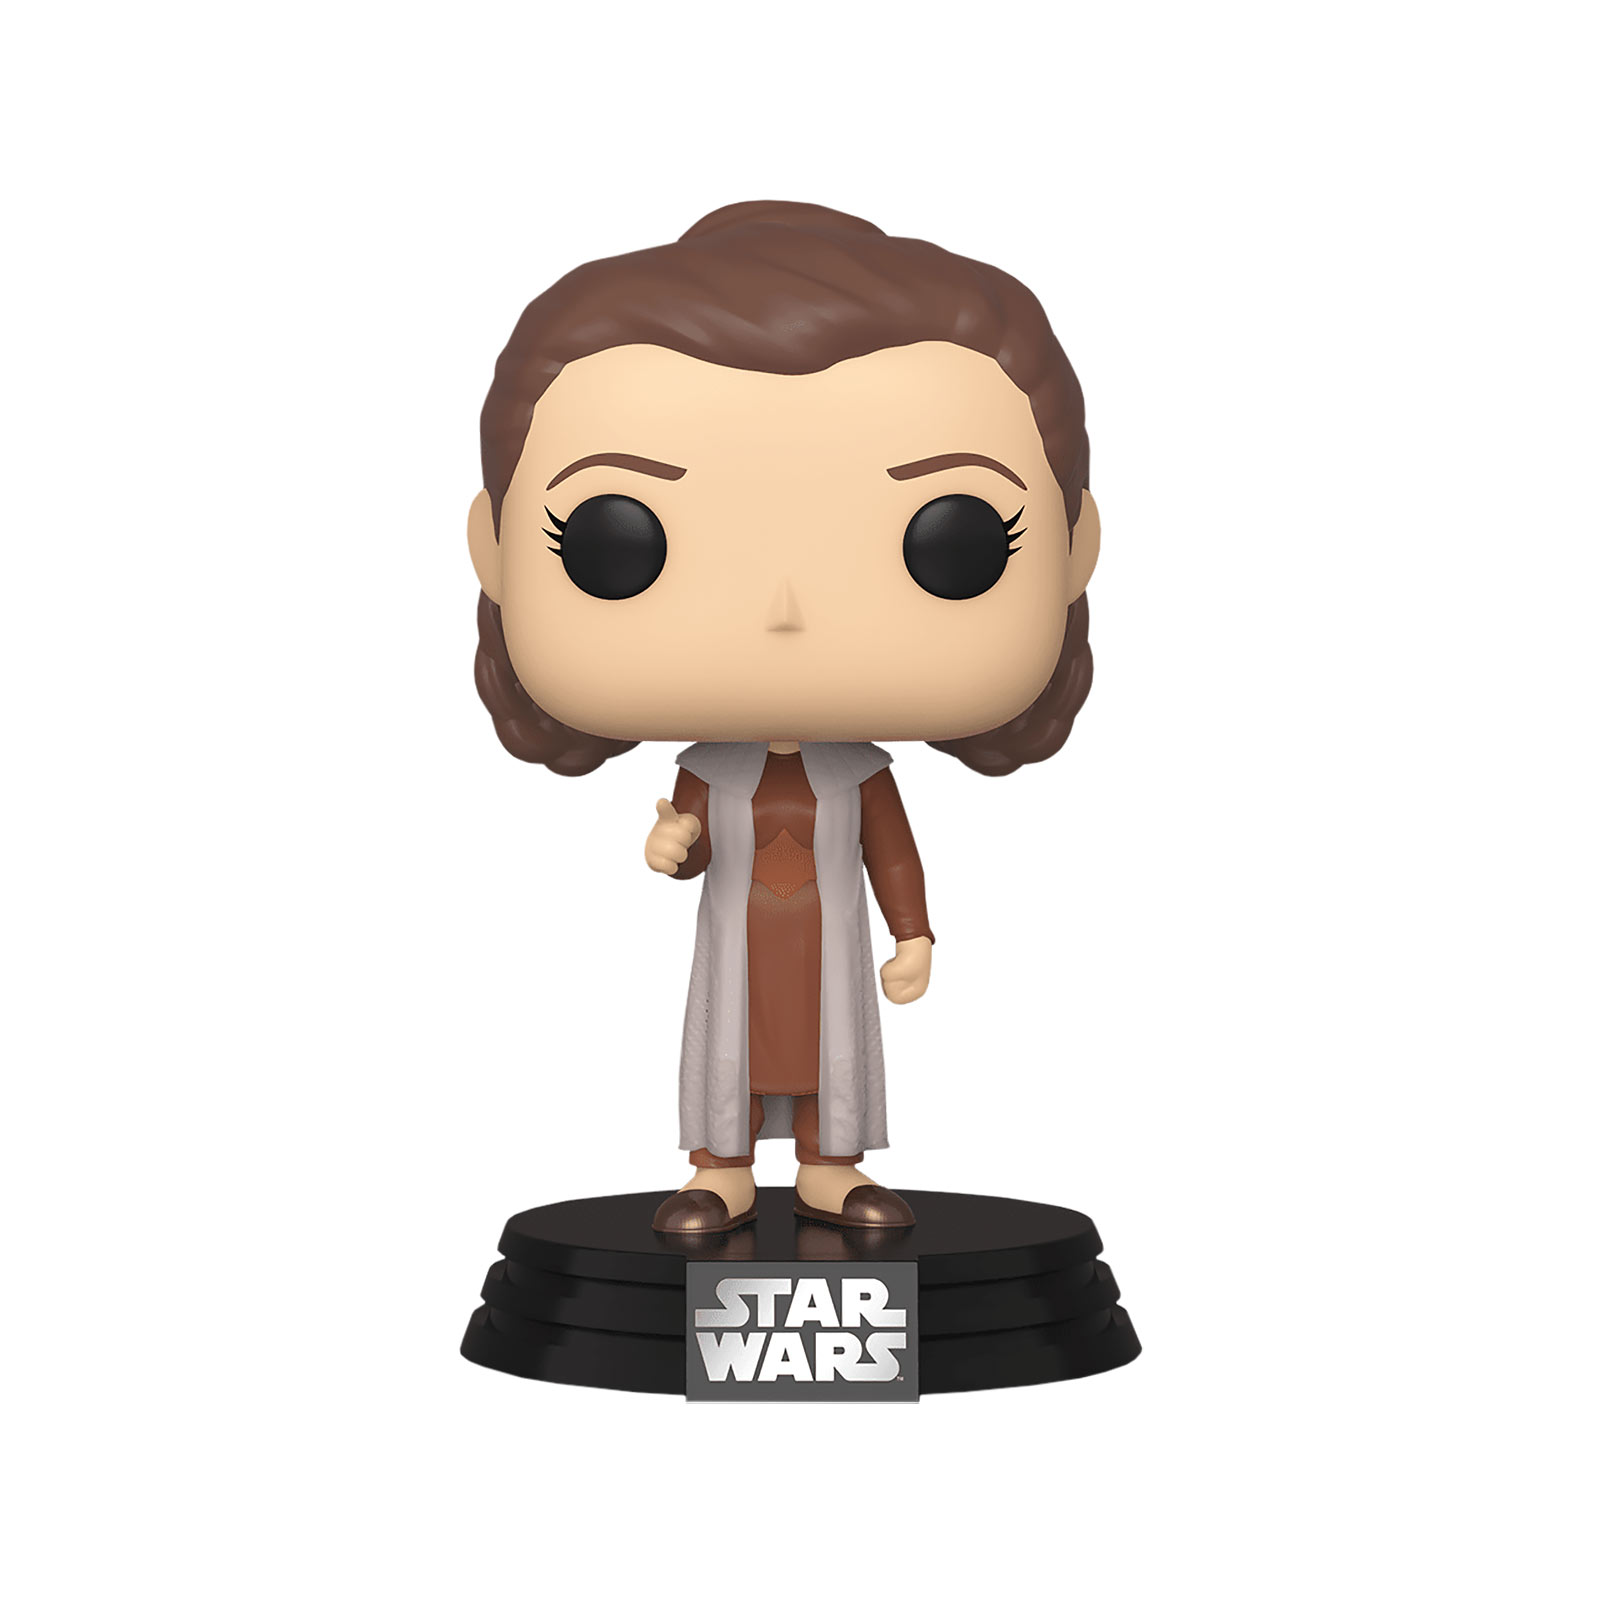 Star Wars - Leia Bespin Funko Pop bobblehead figure